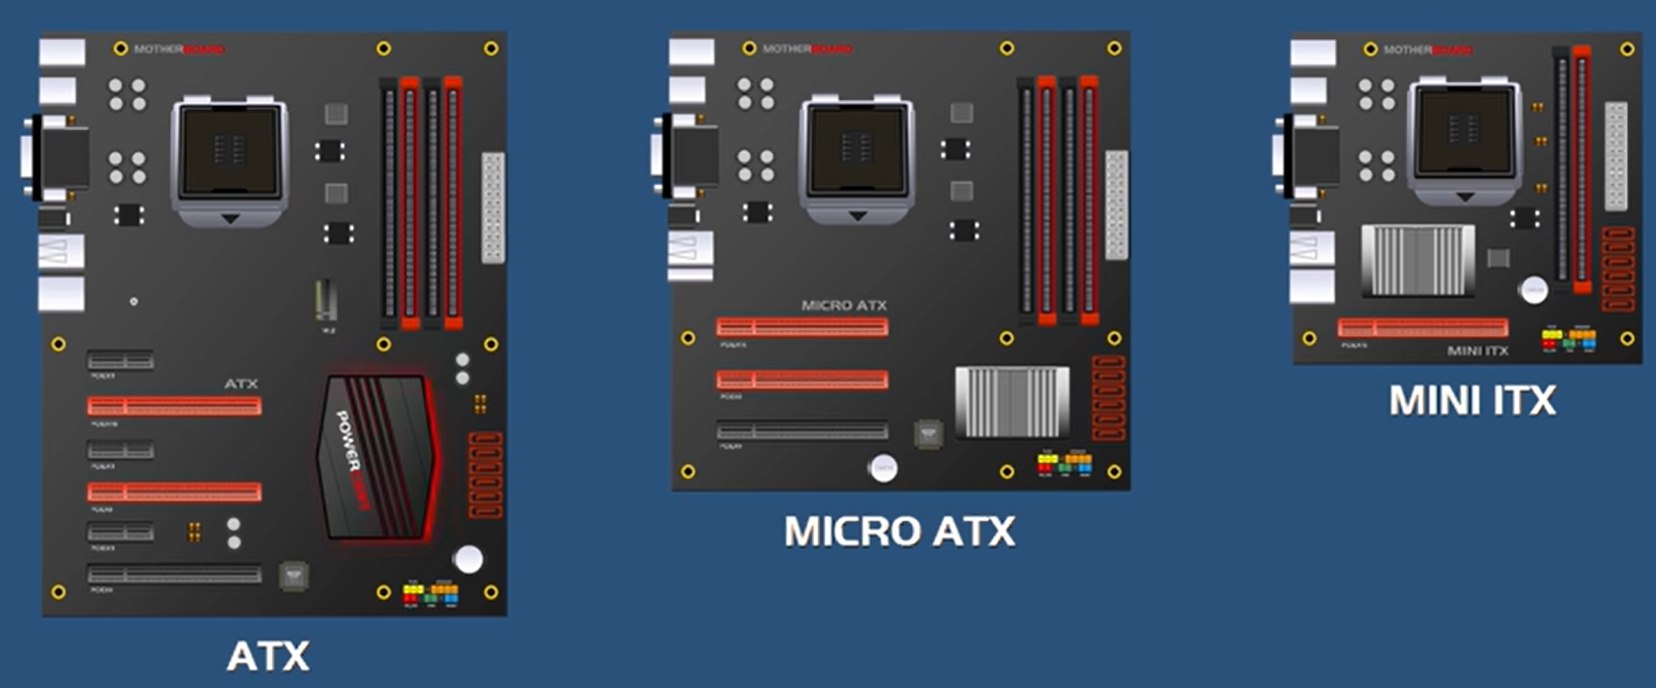 ATX Vs EATX Motherboard Comparison - ElectronicsHub